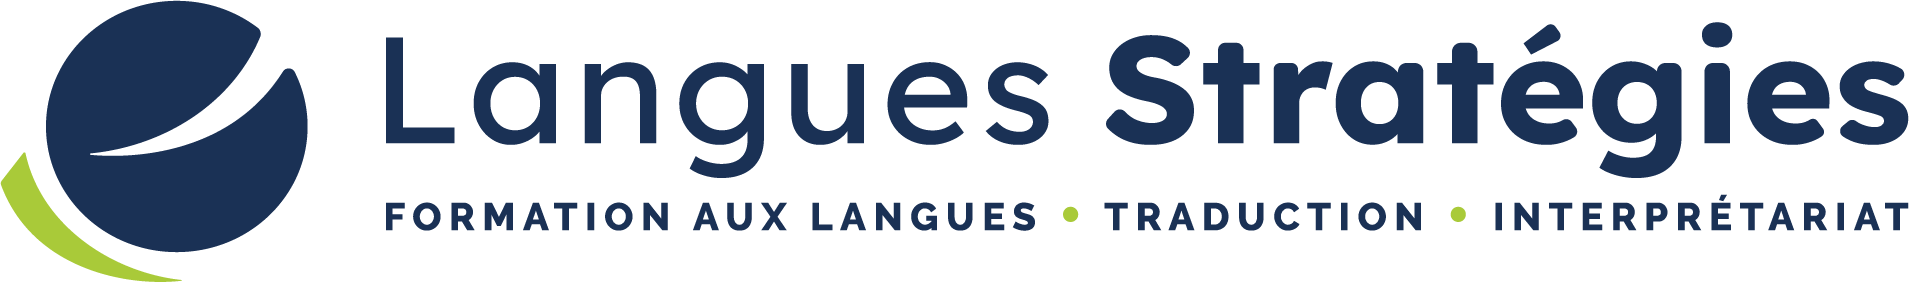 logo - Langues stratégies